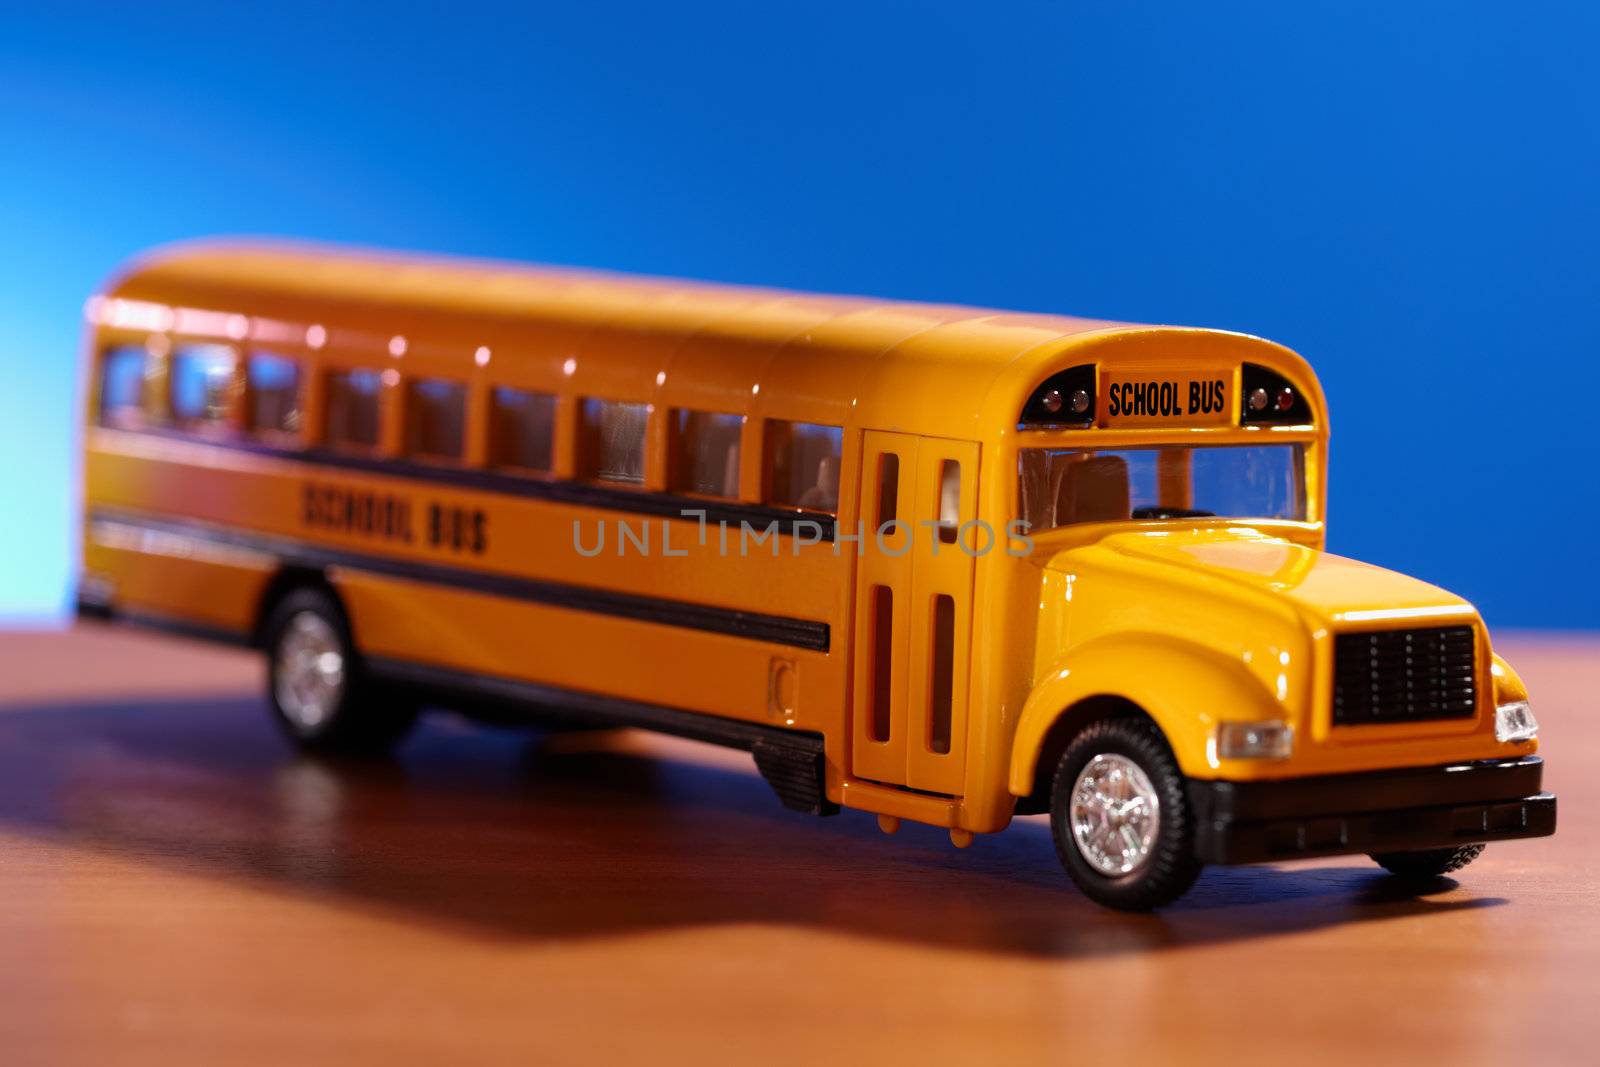 School bus by Kuzma